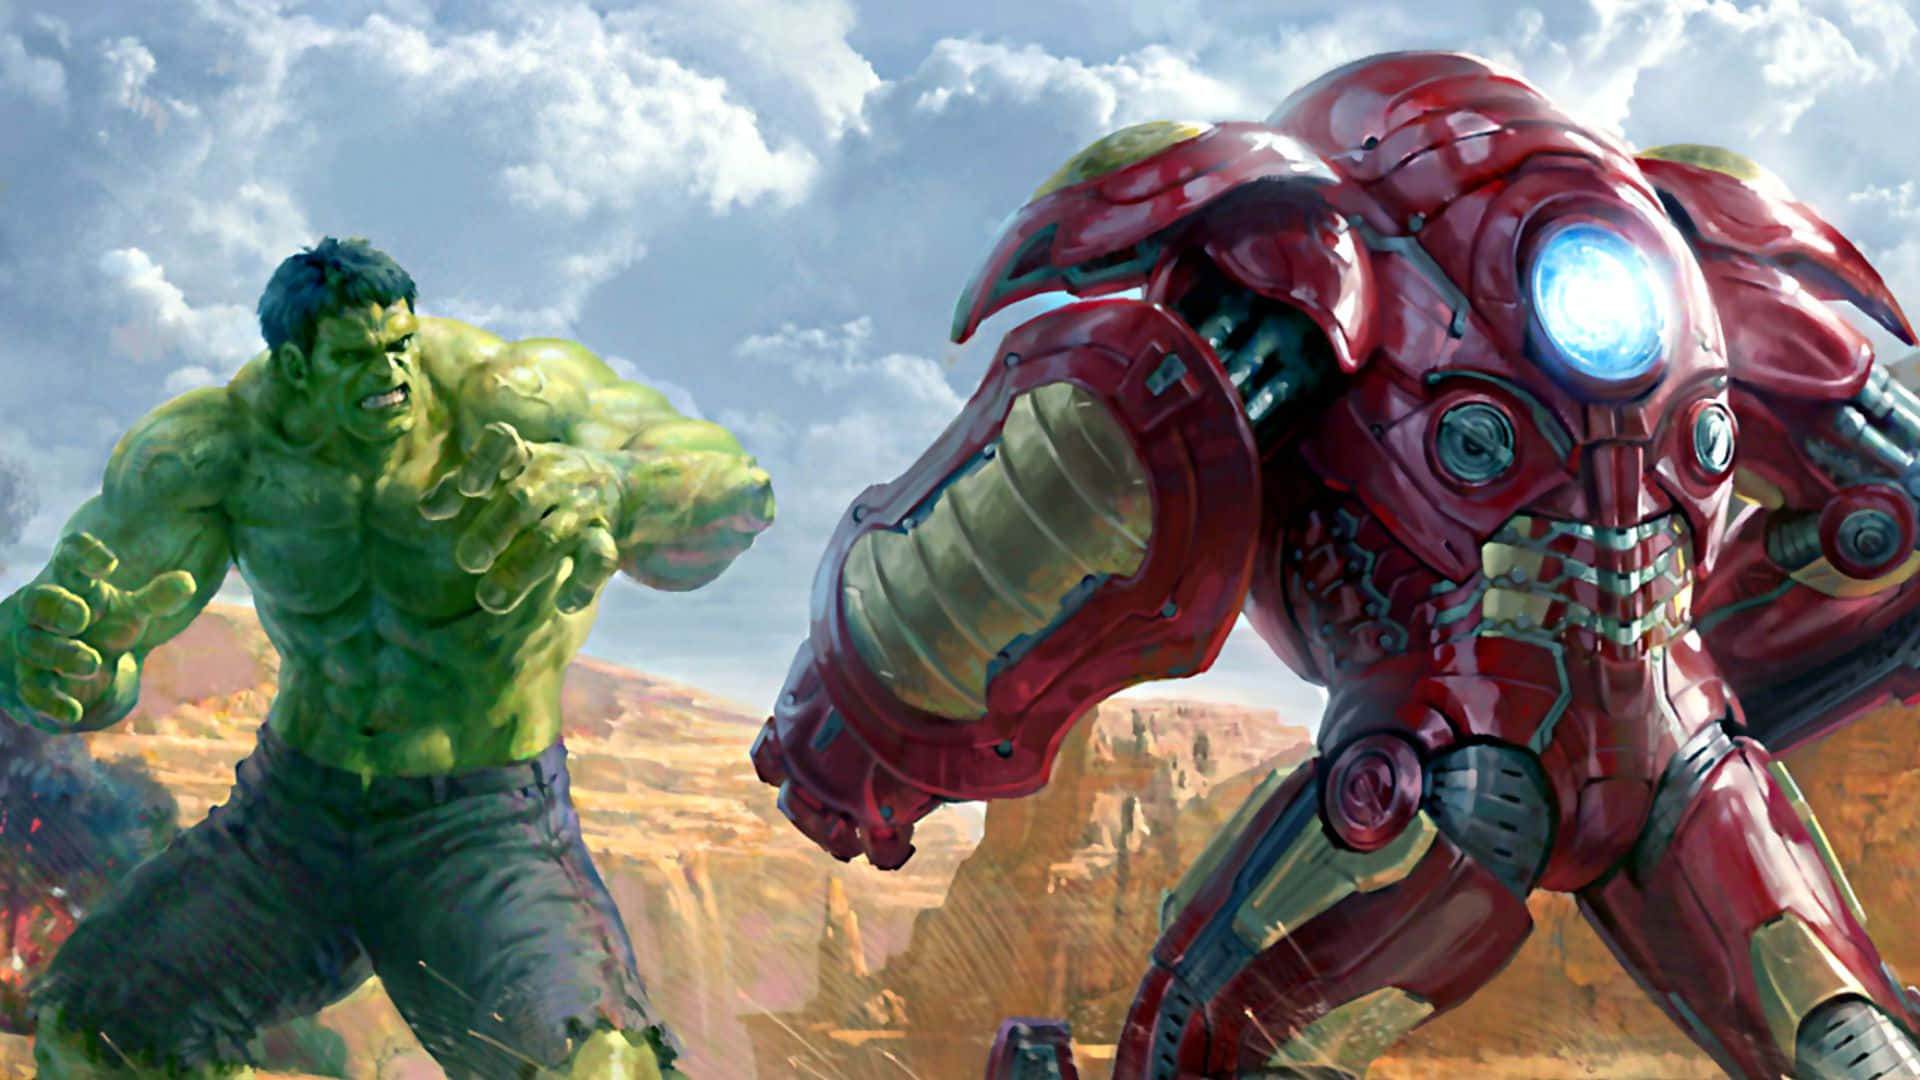 Iron Man and Hulk go head to head Wallpaper